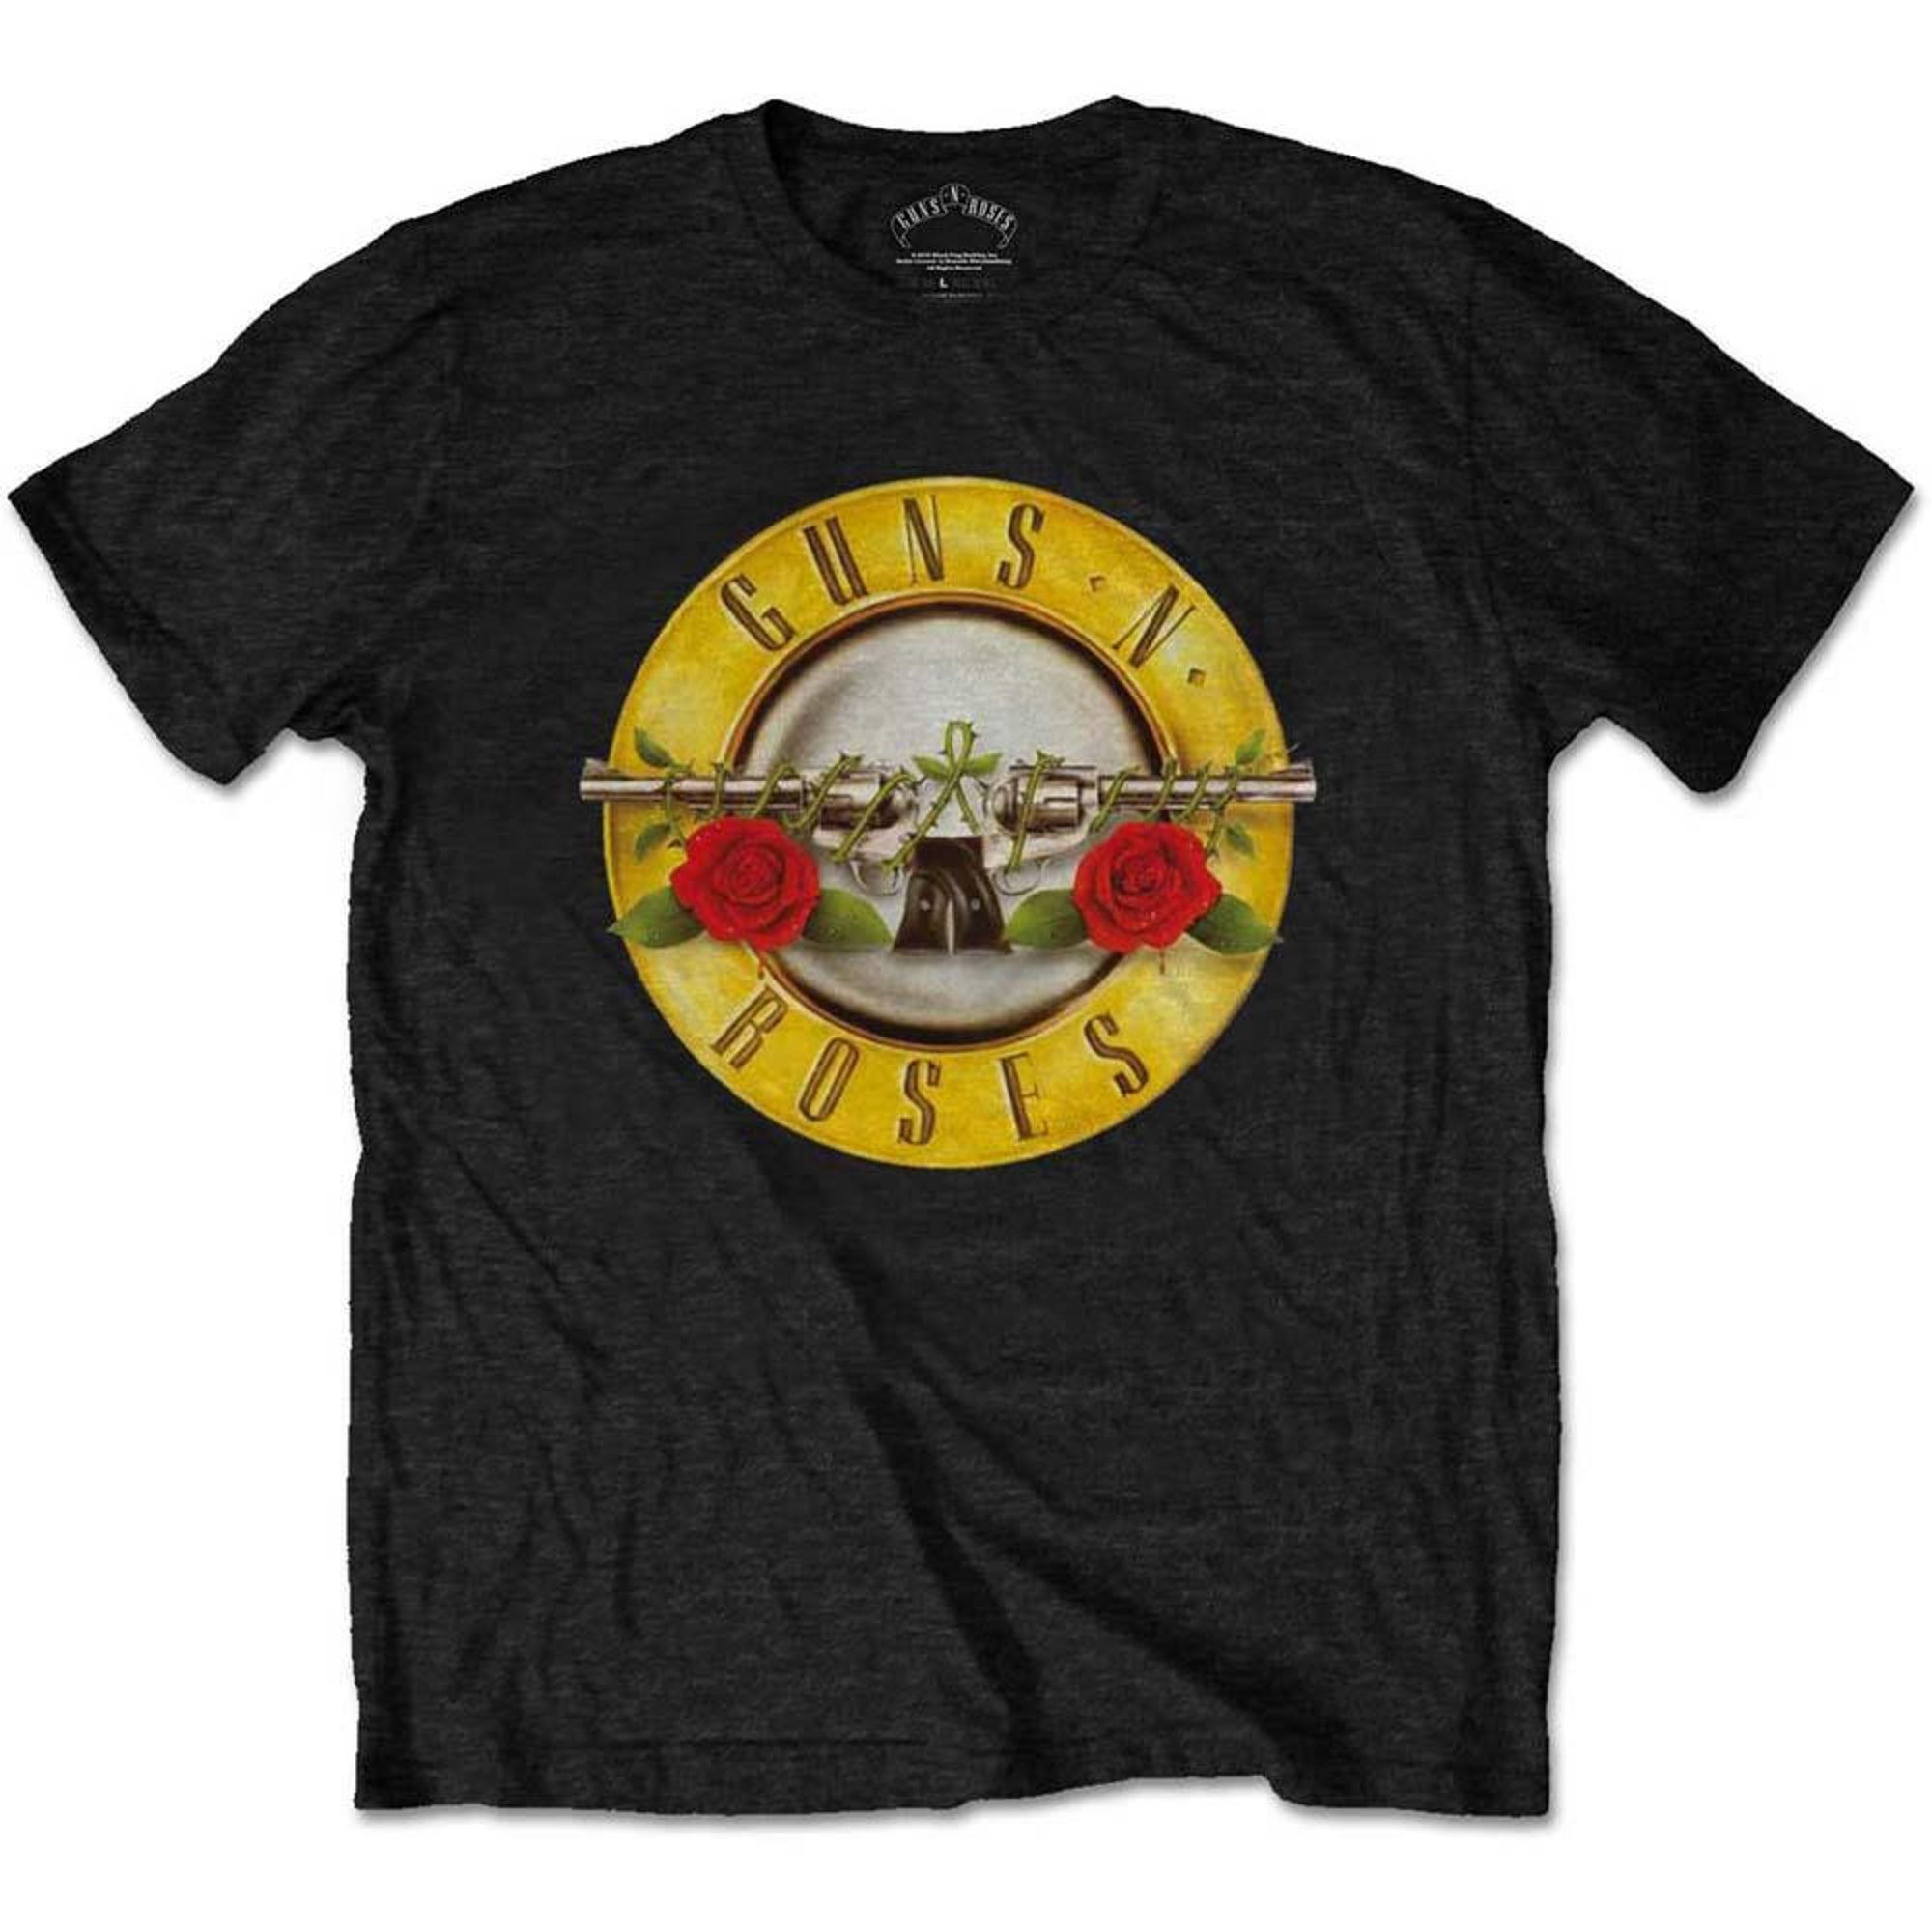 Discover Maglietta T-Shirt Guns N' Roses Hard Rock Band Per Fan Uomo Donna Bambini